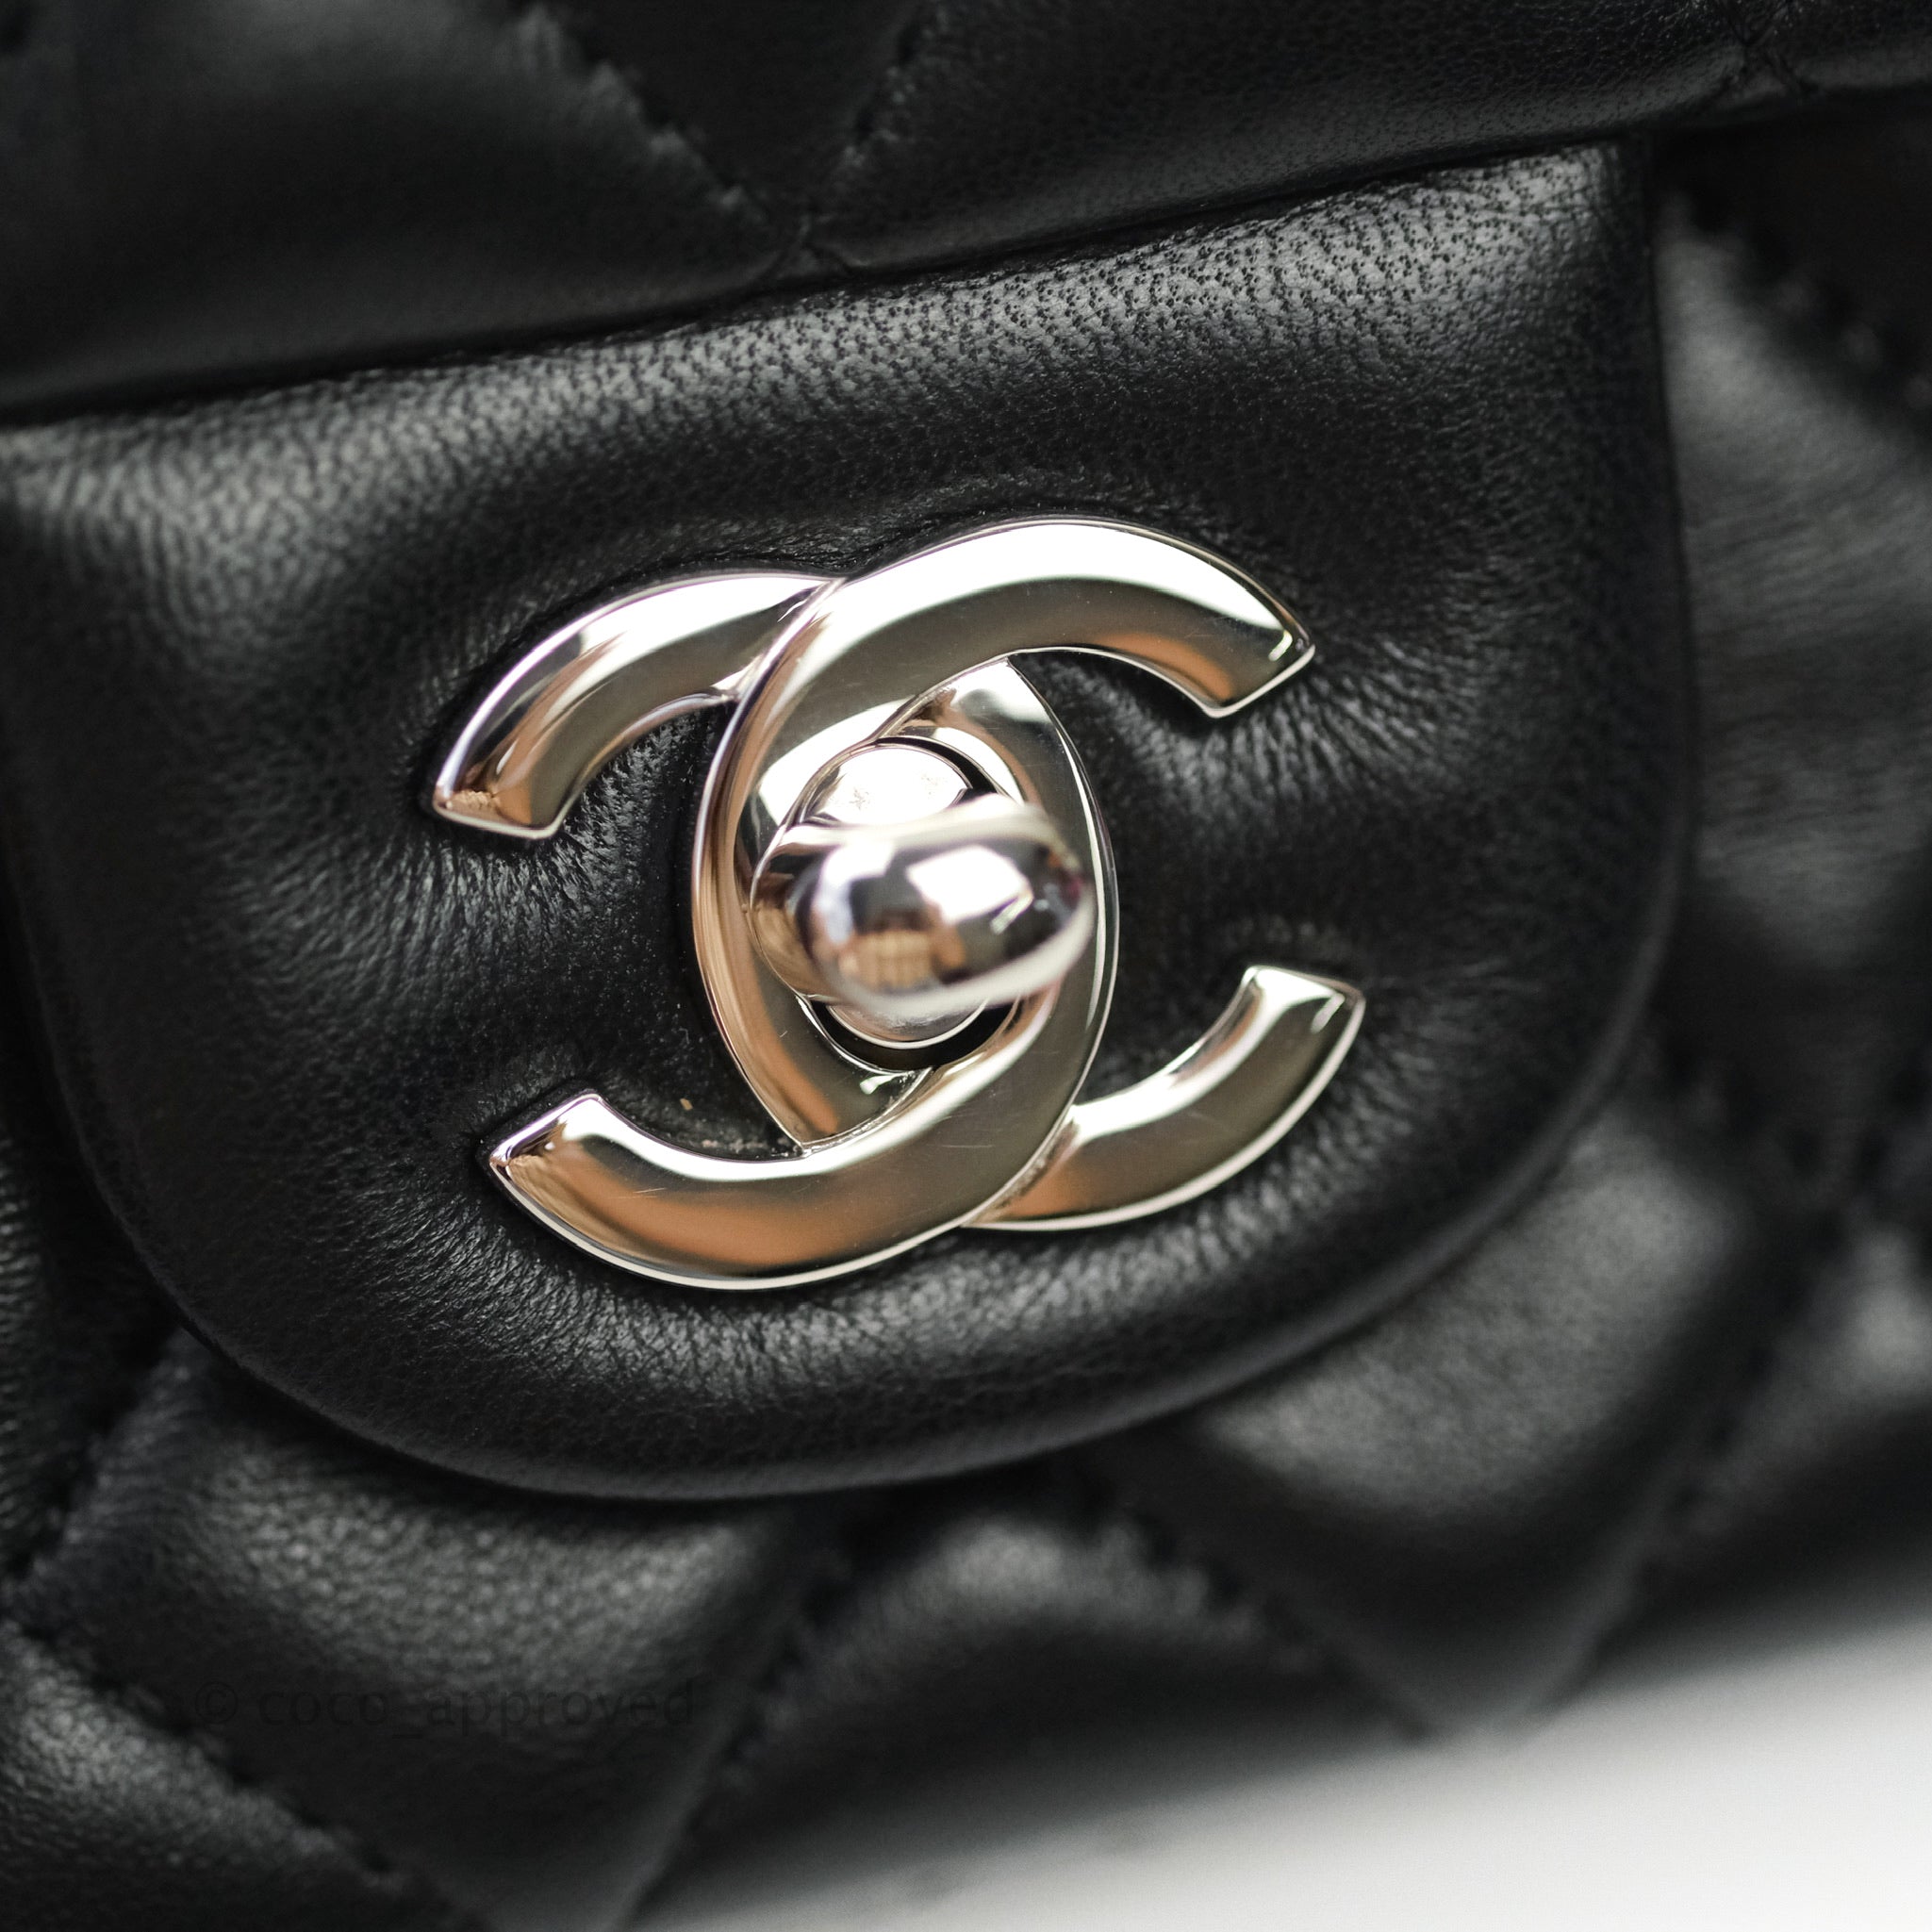 Chanel Quilted Mini Rectangular Flap Raffia Jute Thread Black & Beige –  Coco Approved Studio